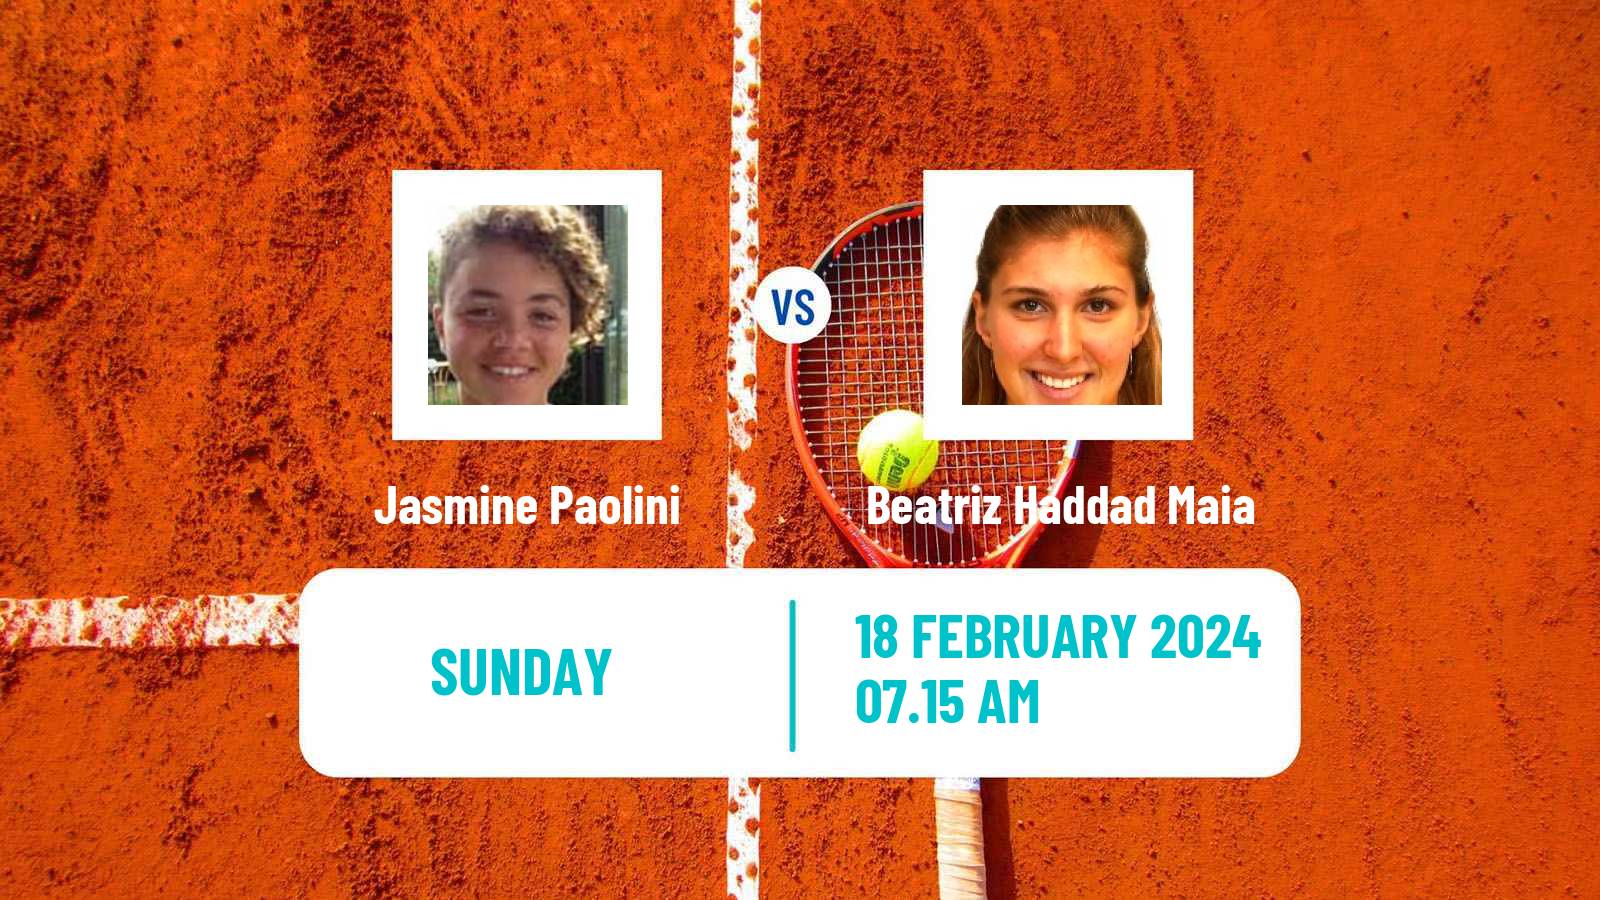 Tennis WTA Dubai Jasmine Paolini - Beatriz Haddad Maia